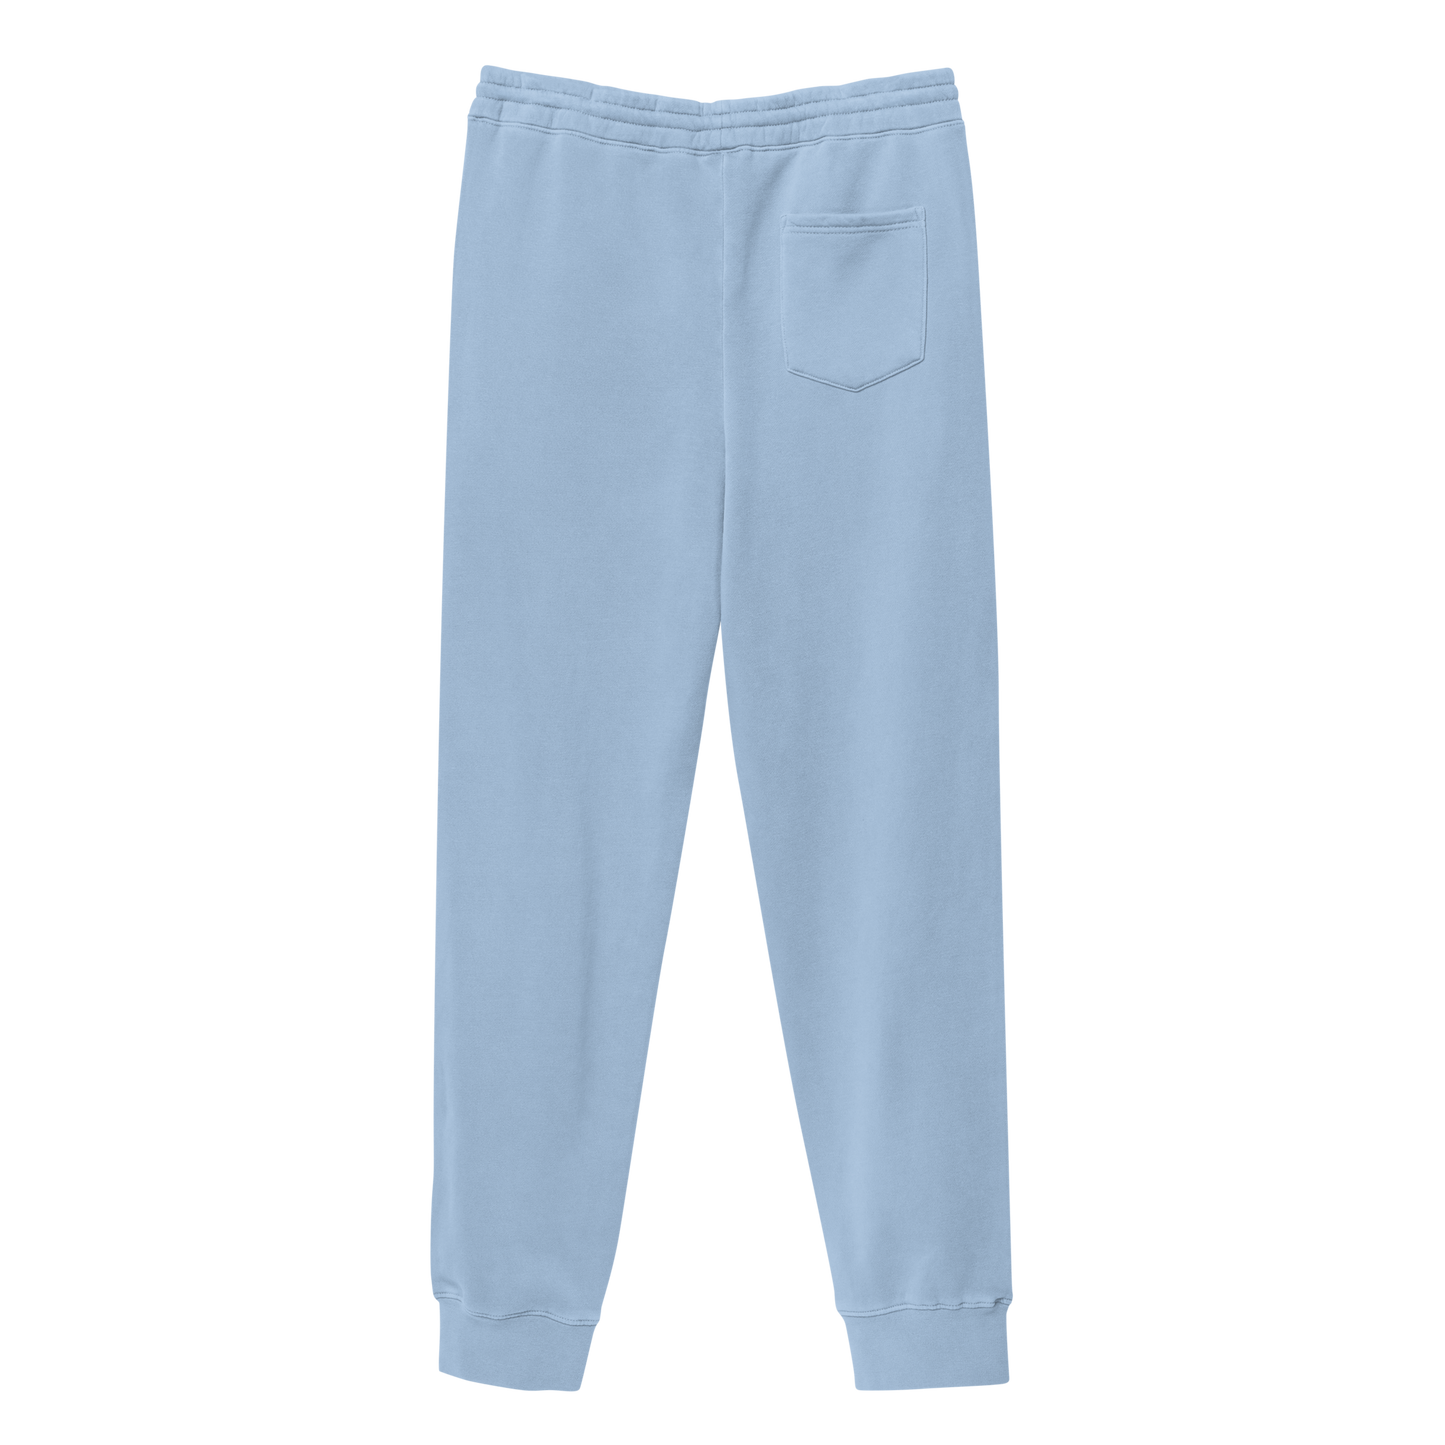 Women's Pigment-Dyed Light Blue Sweatpants - PSVP Embroidery | Sweatpants | PARADIS SVP